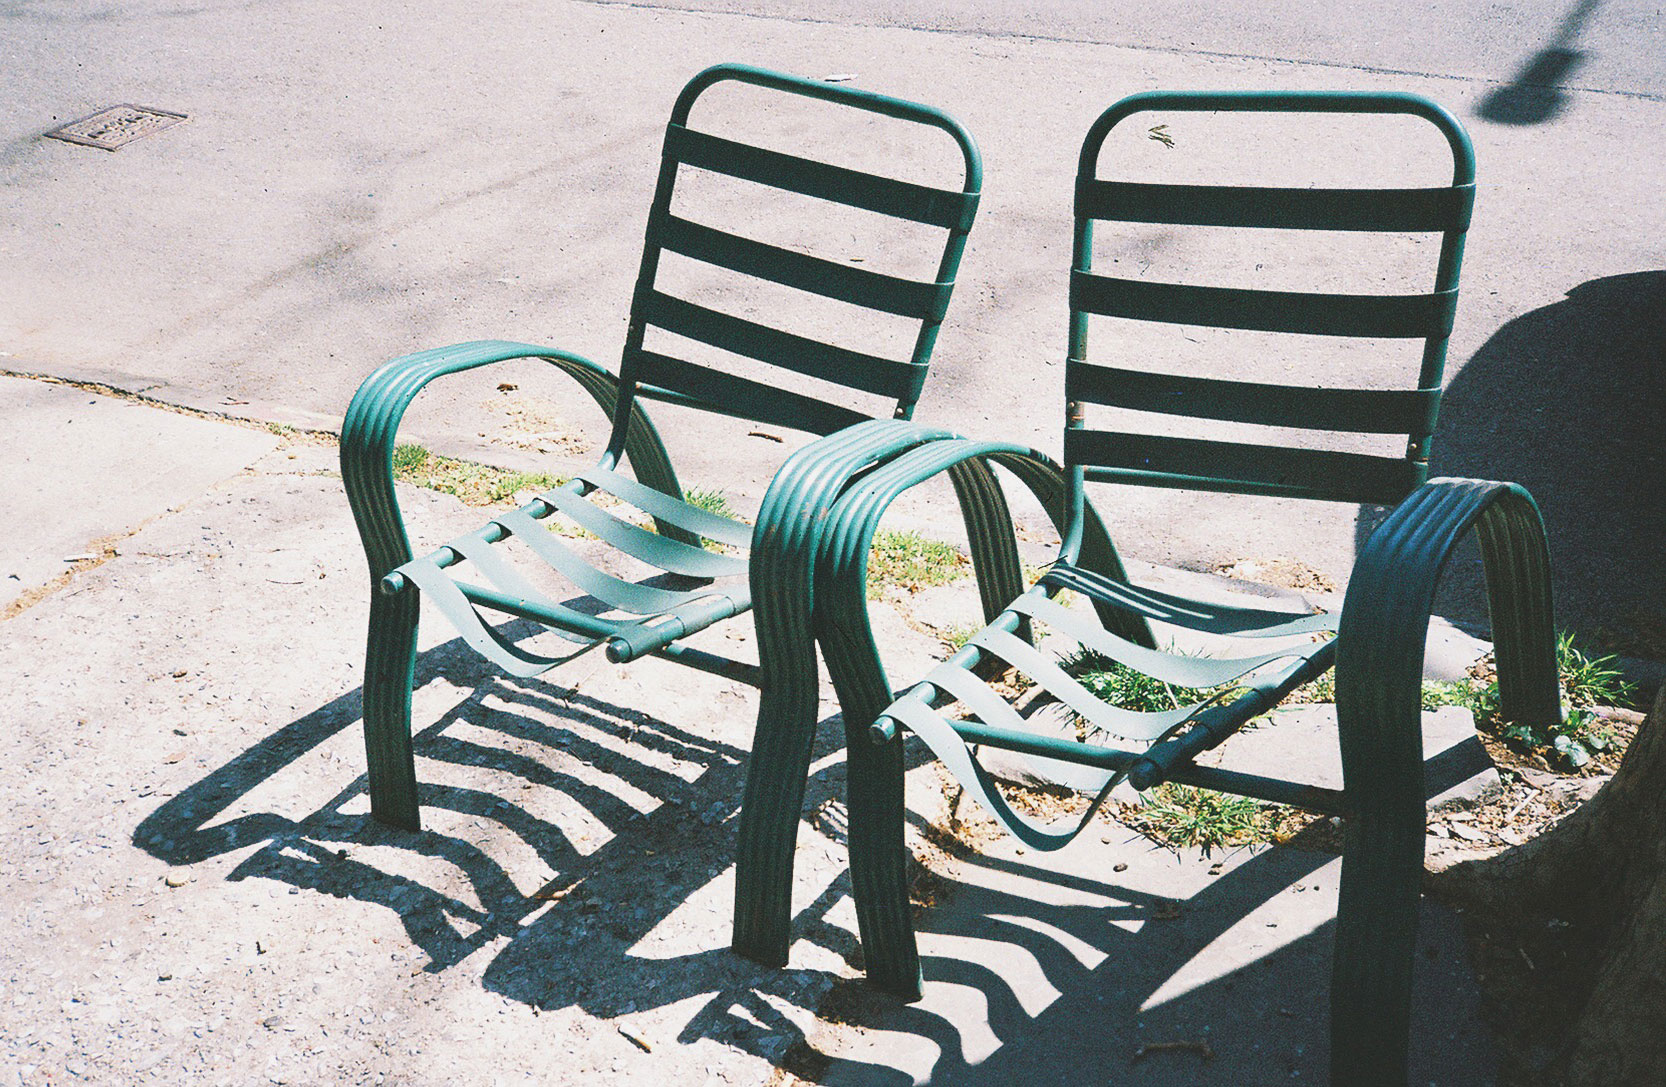 Chair pair in Williamsburg, Brooklyn